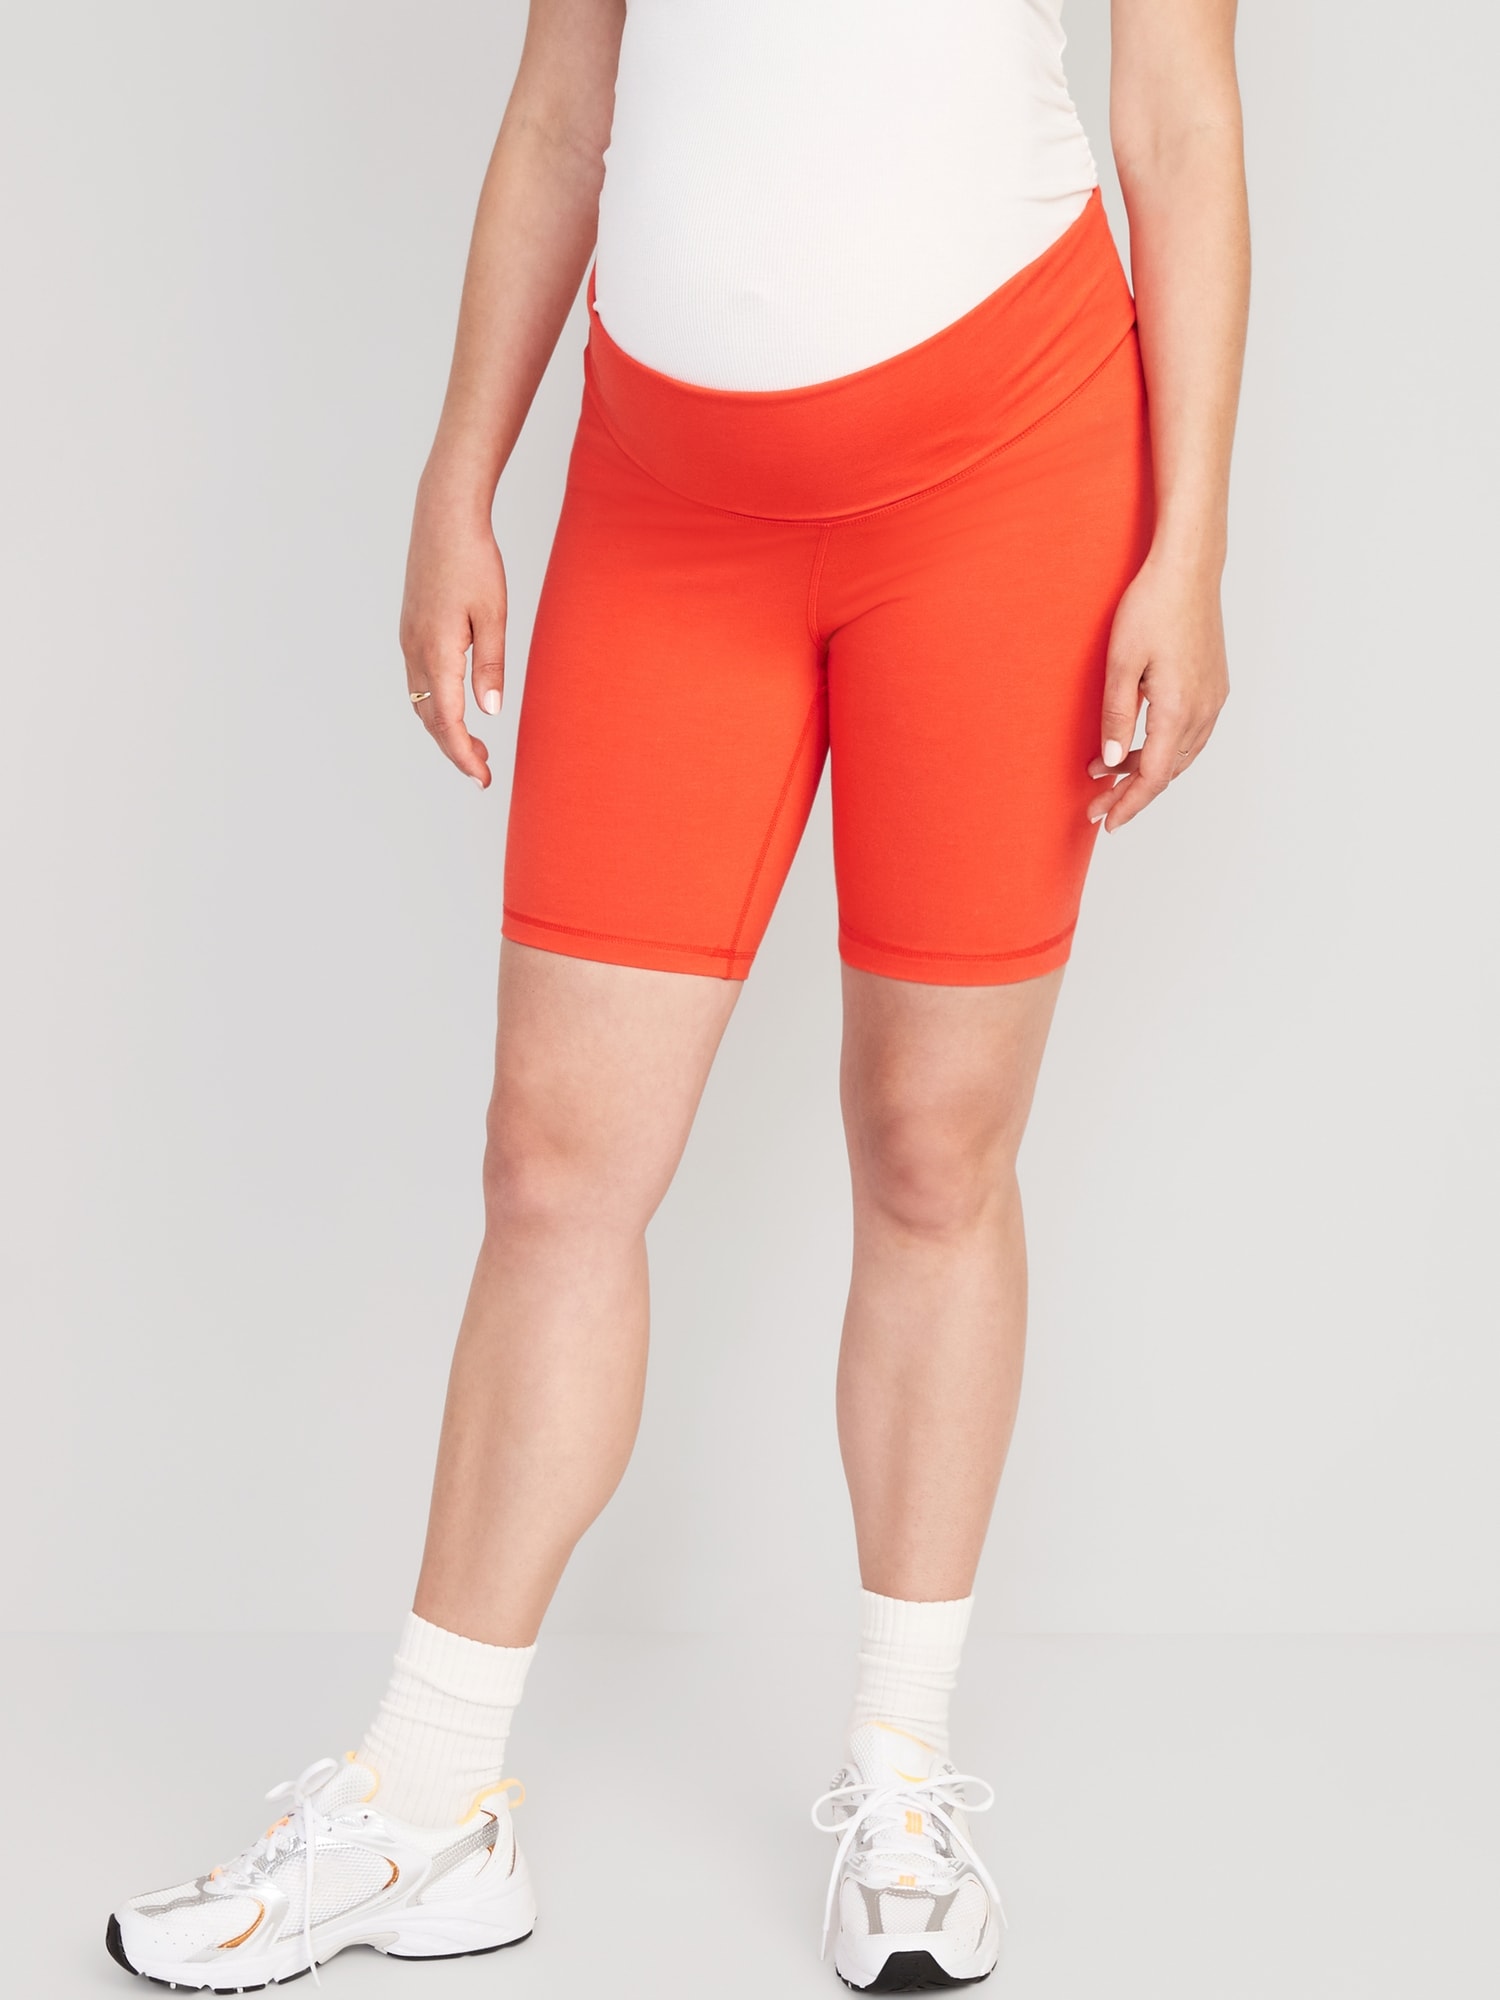 PAROLI 5” Biker Shorts for Women Tummy Control Workout Compression